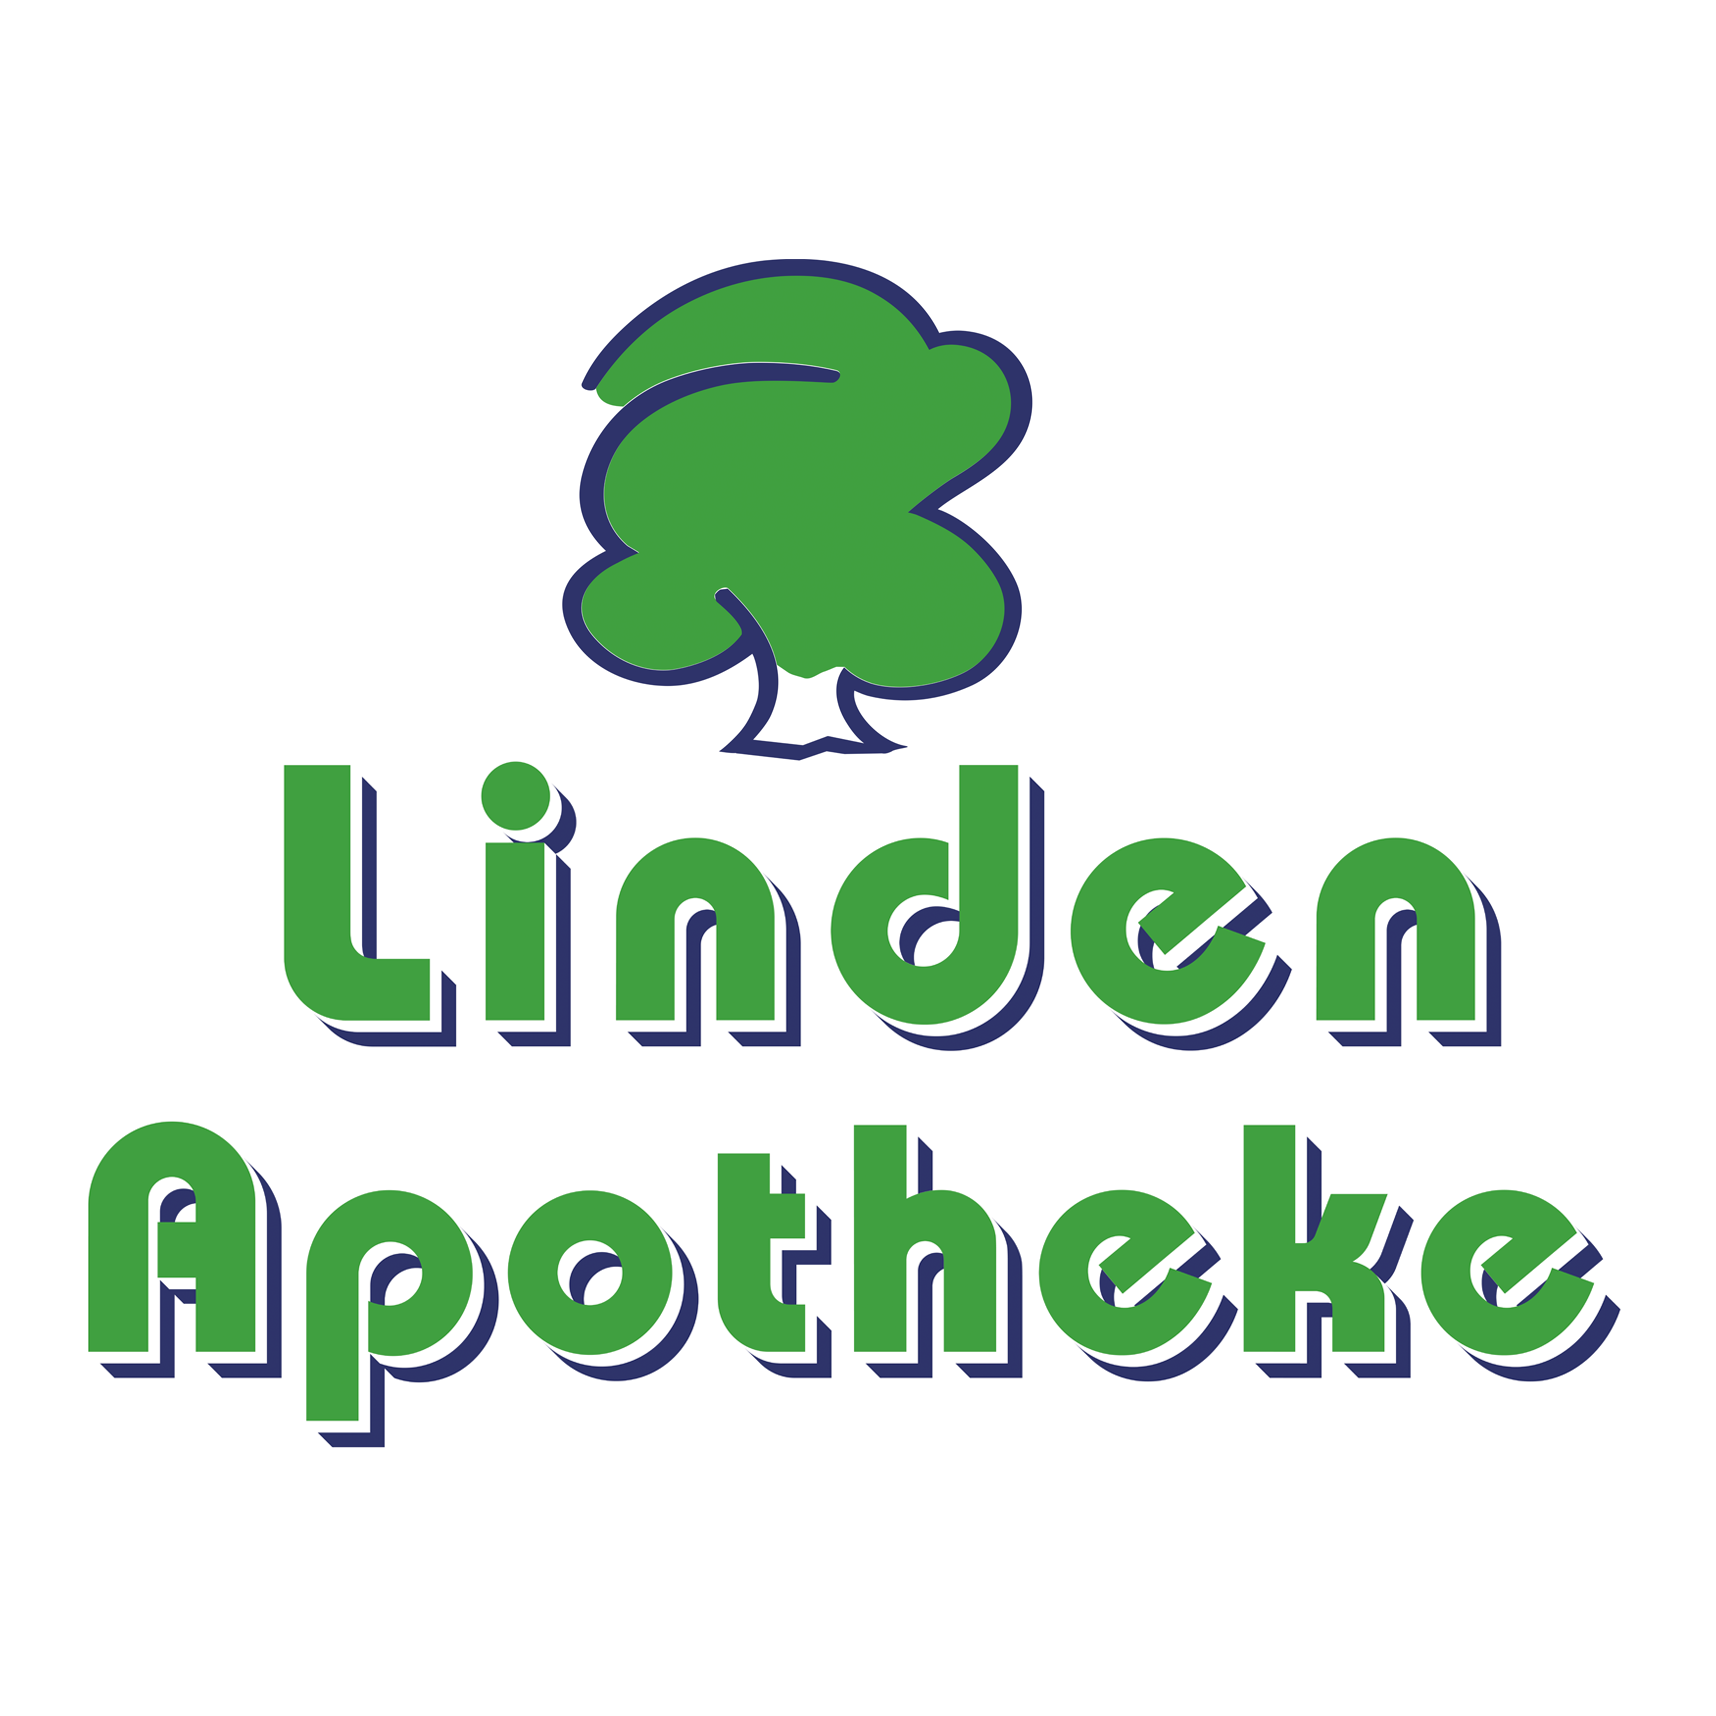 Linden-Apotheke in Hiddenhausen - Logo